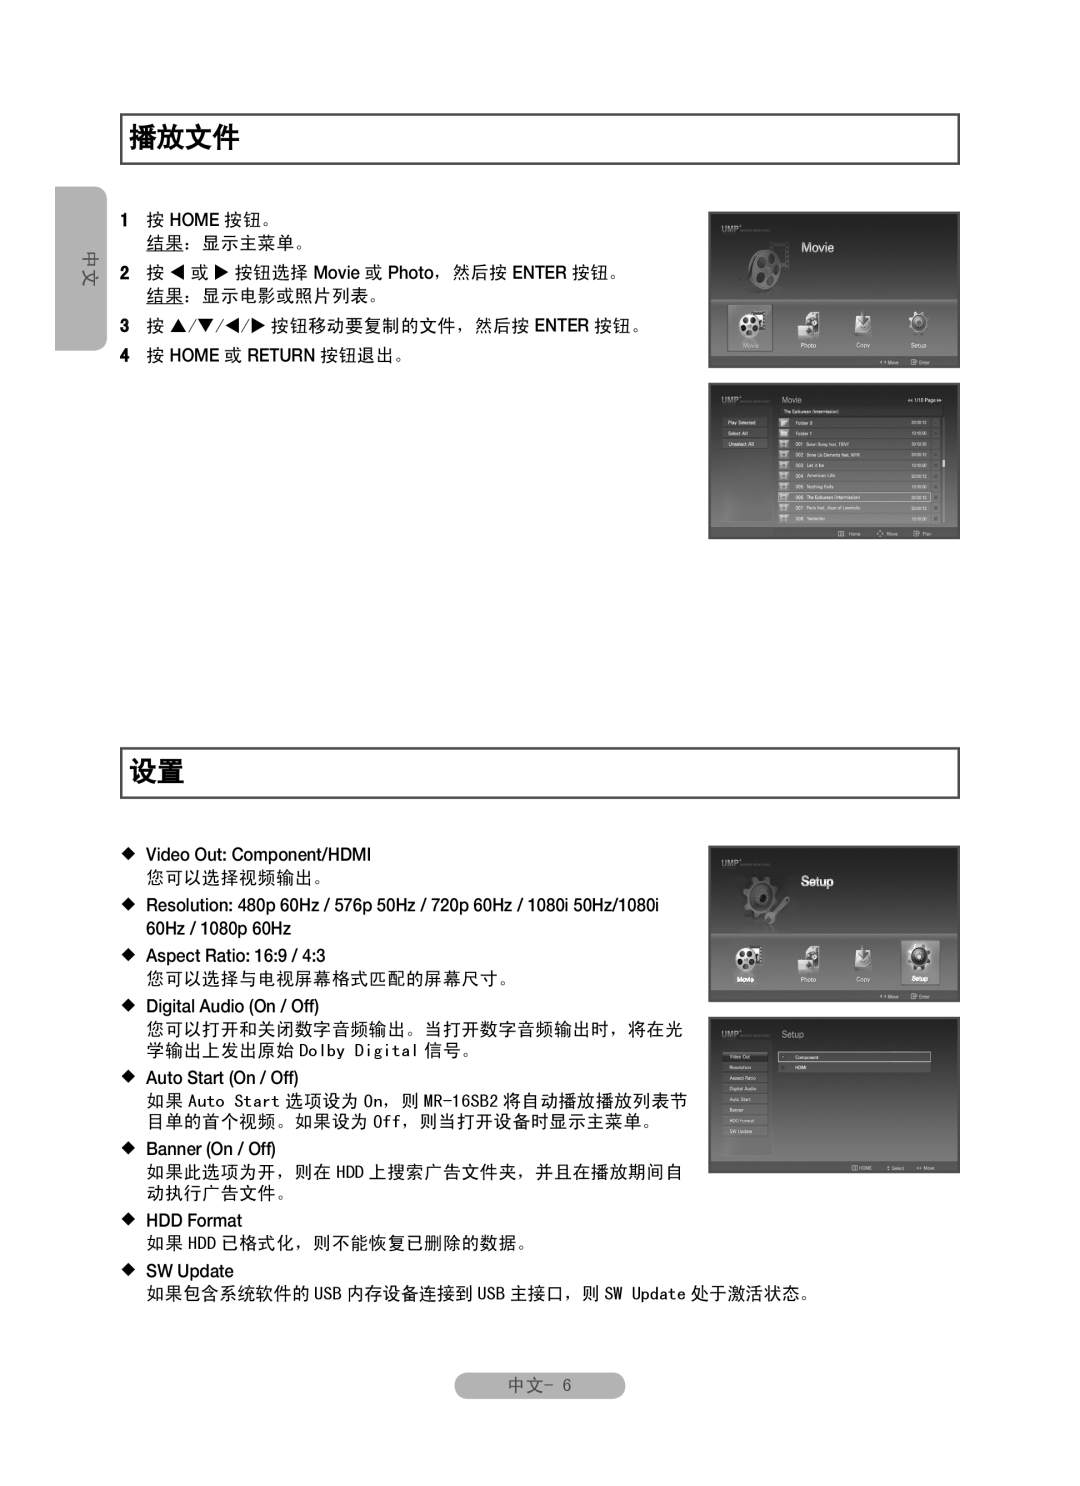 Samsung MR-16SB2 manual 播放文件 